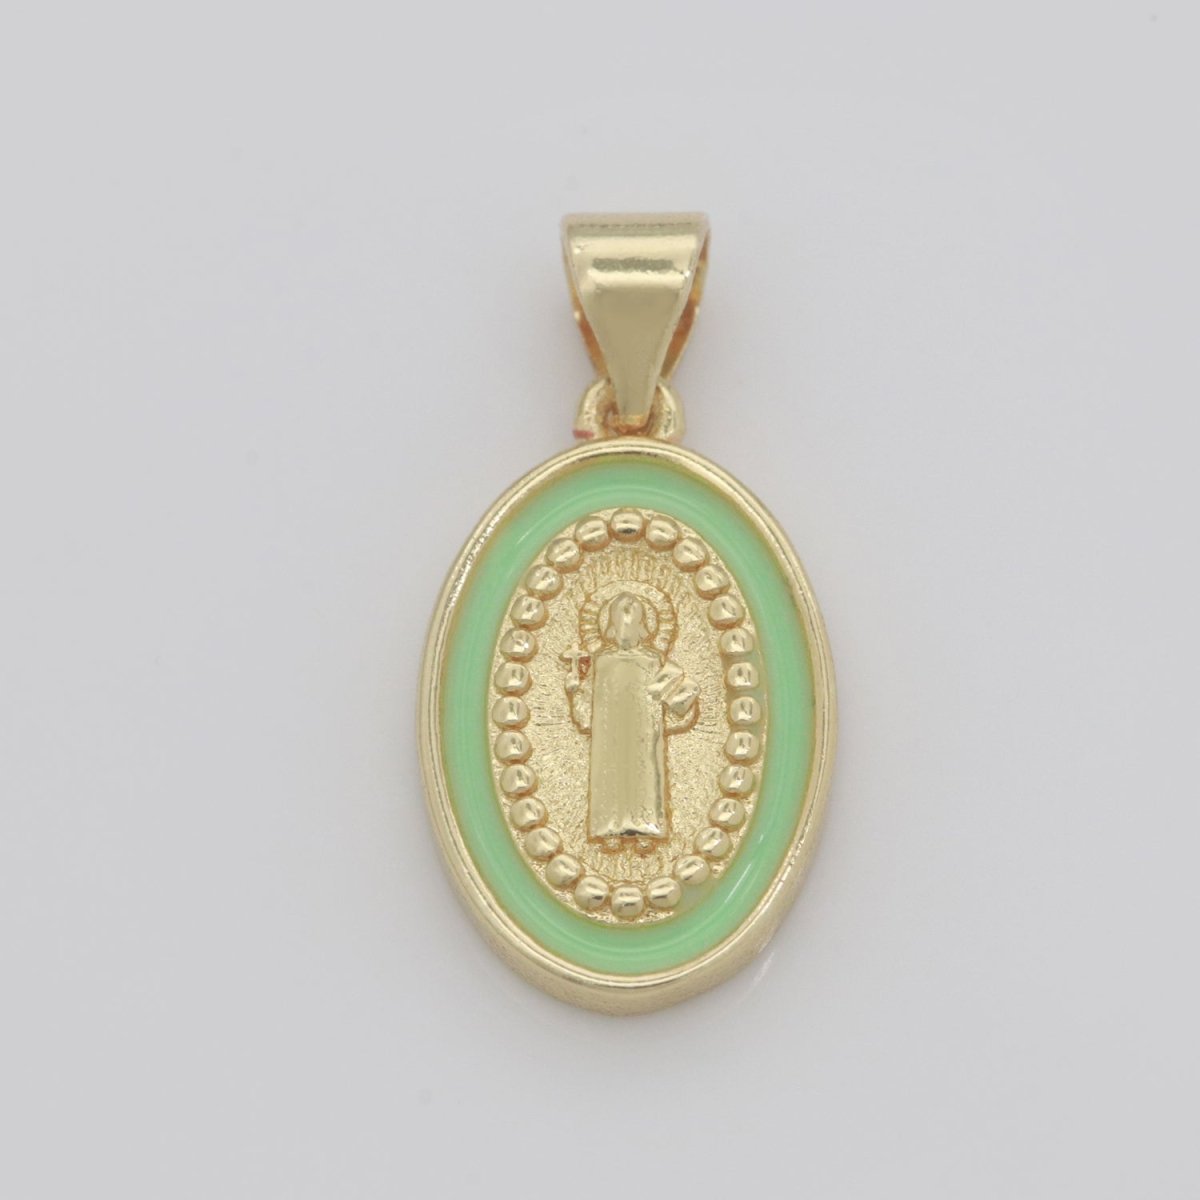 Dainty Saint Jude Charm gold medallion Charm, gold filled San Judas religious medal Patron Saint Pendant Religious Coin Catholic Enamel Jewelry N-1353 N-1354 N-1355 N-1356 N-1357 N-1358 N-1359 N-1360 N-1361 N-1362 - DLUXCA